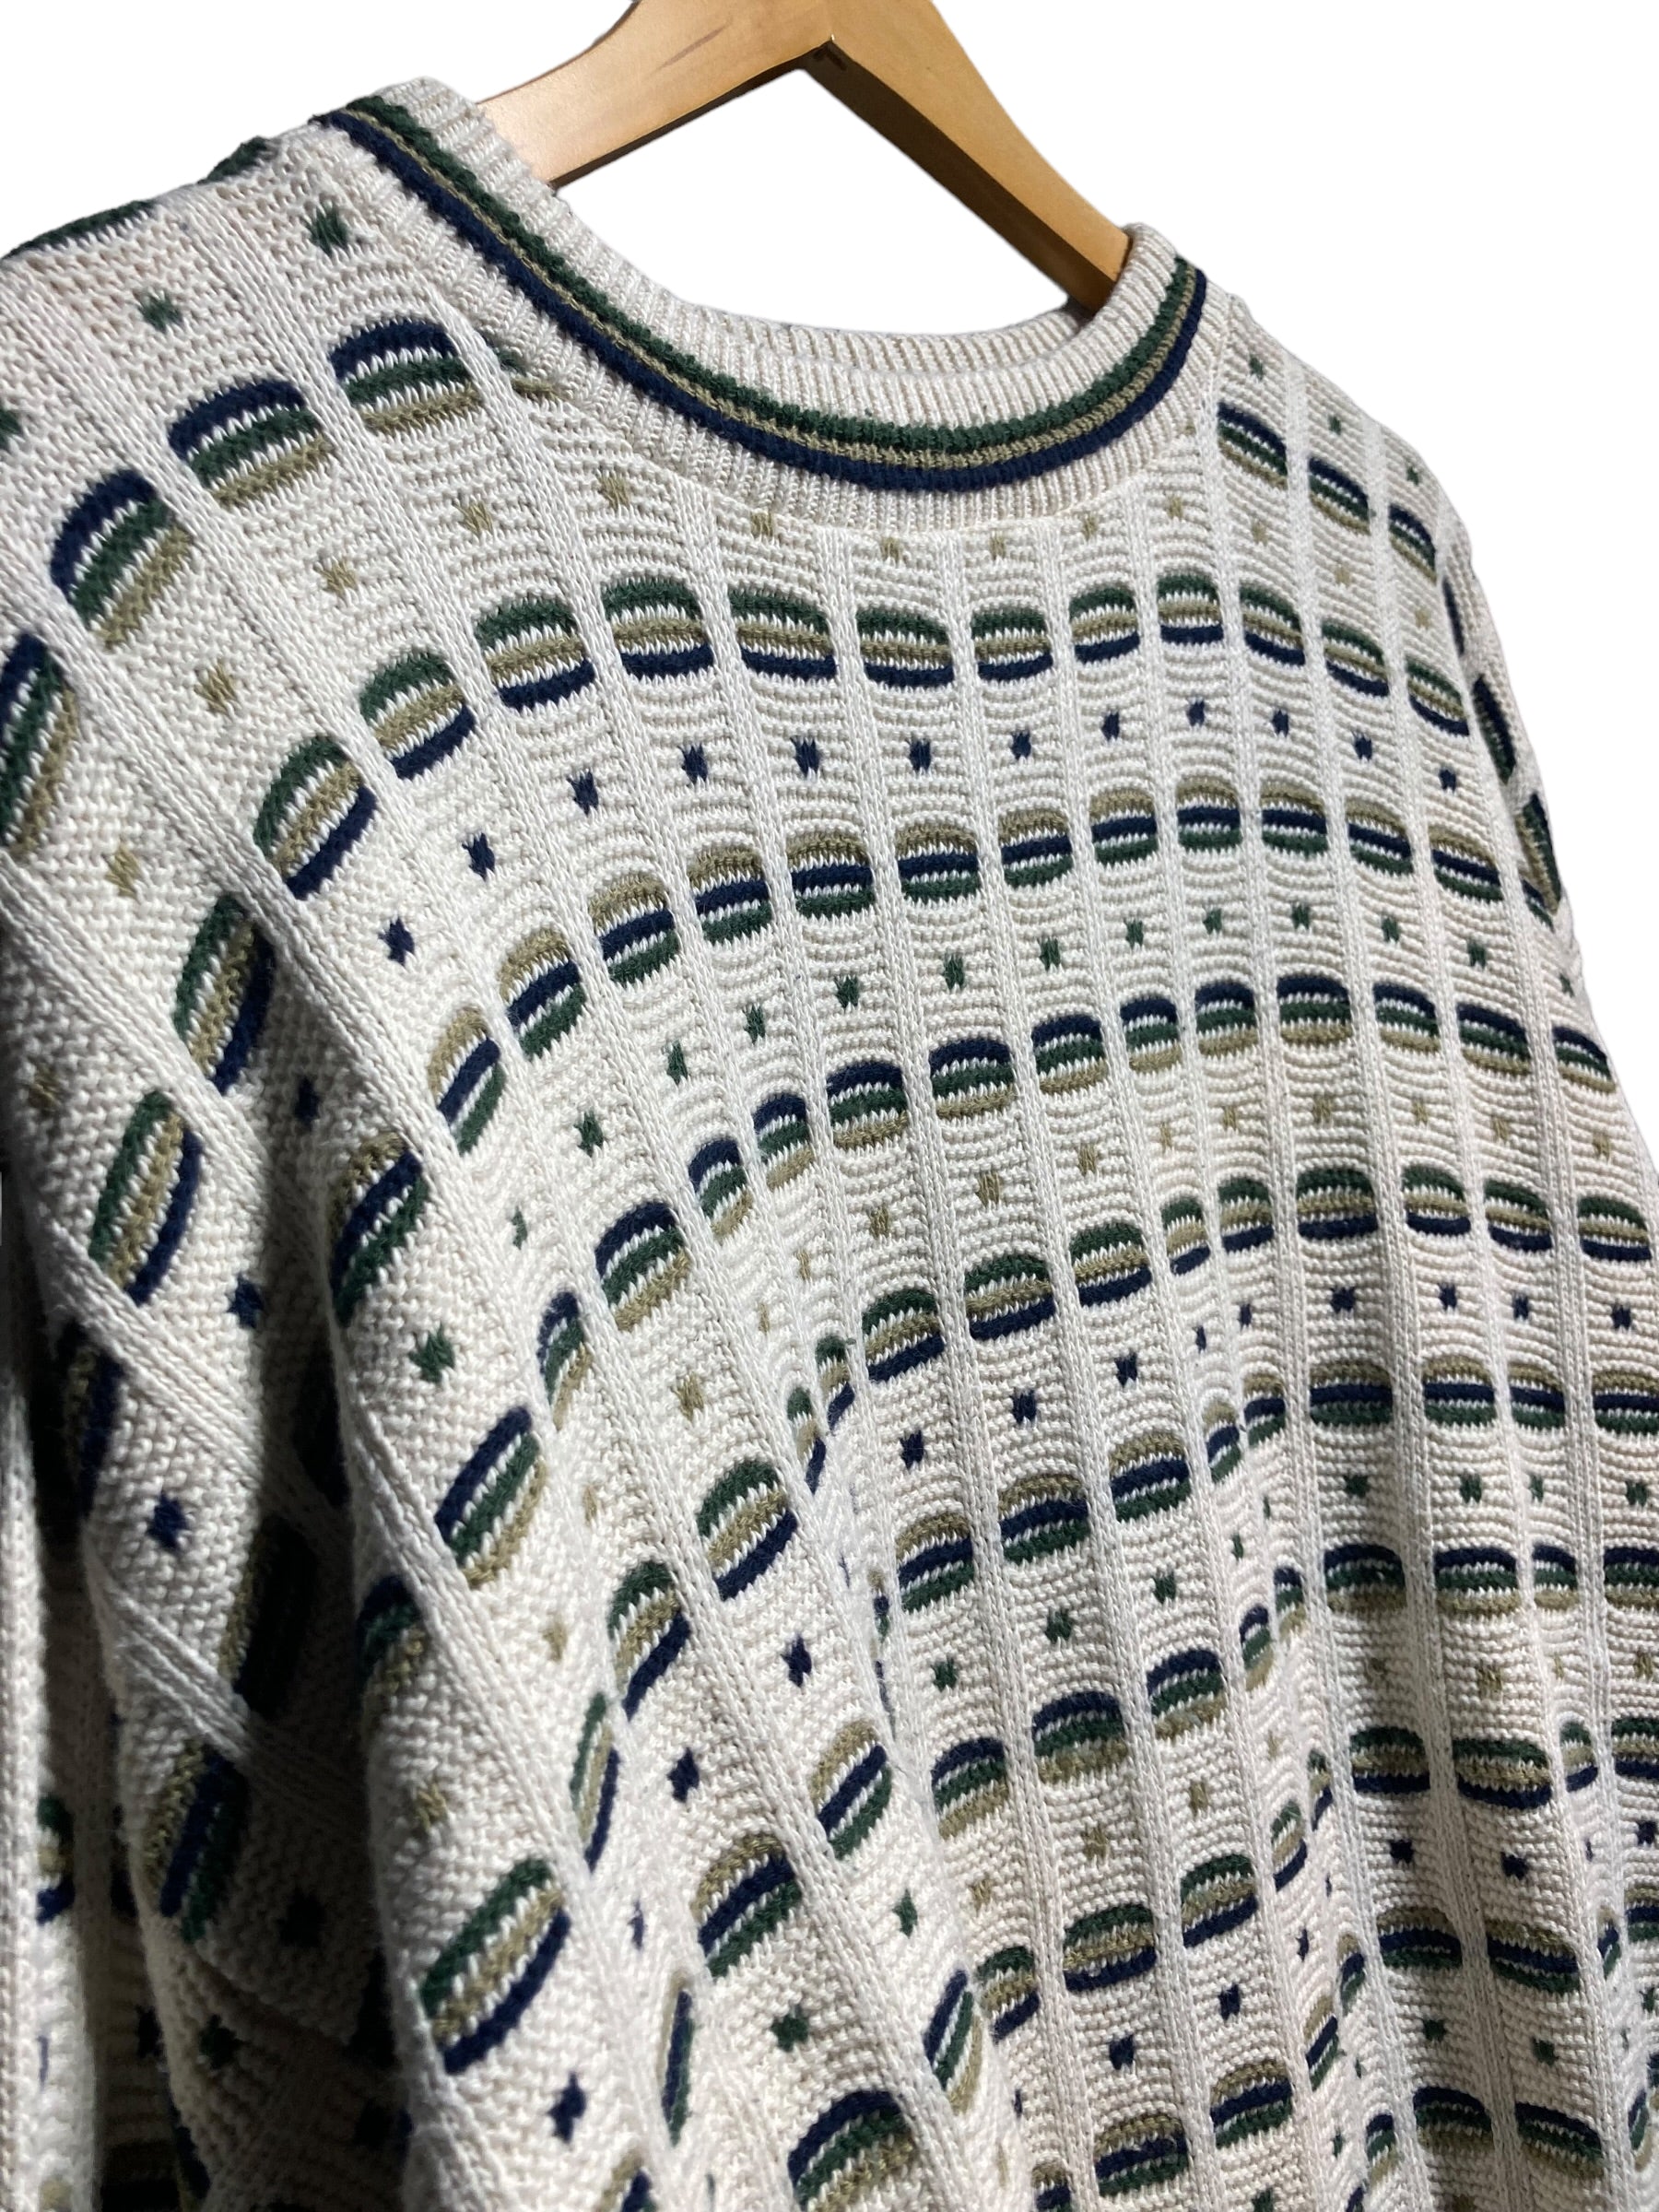 BILL BLASS knit sweater ニット セーター デザイン